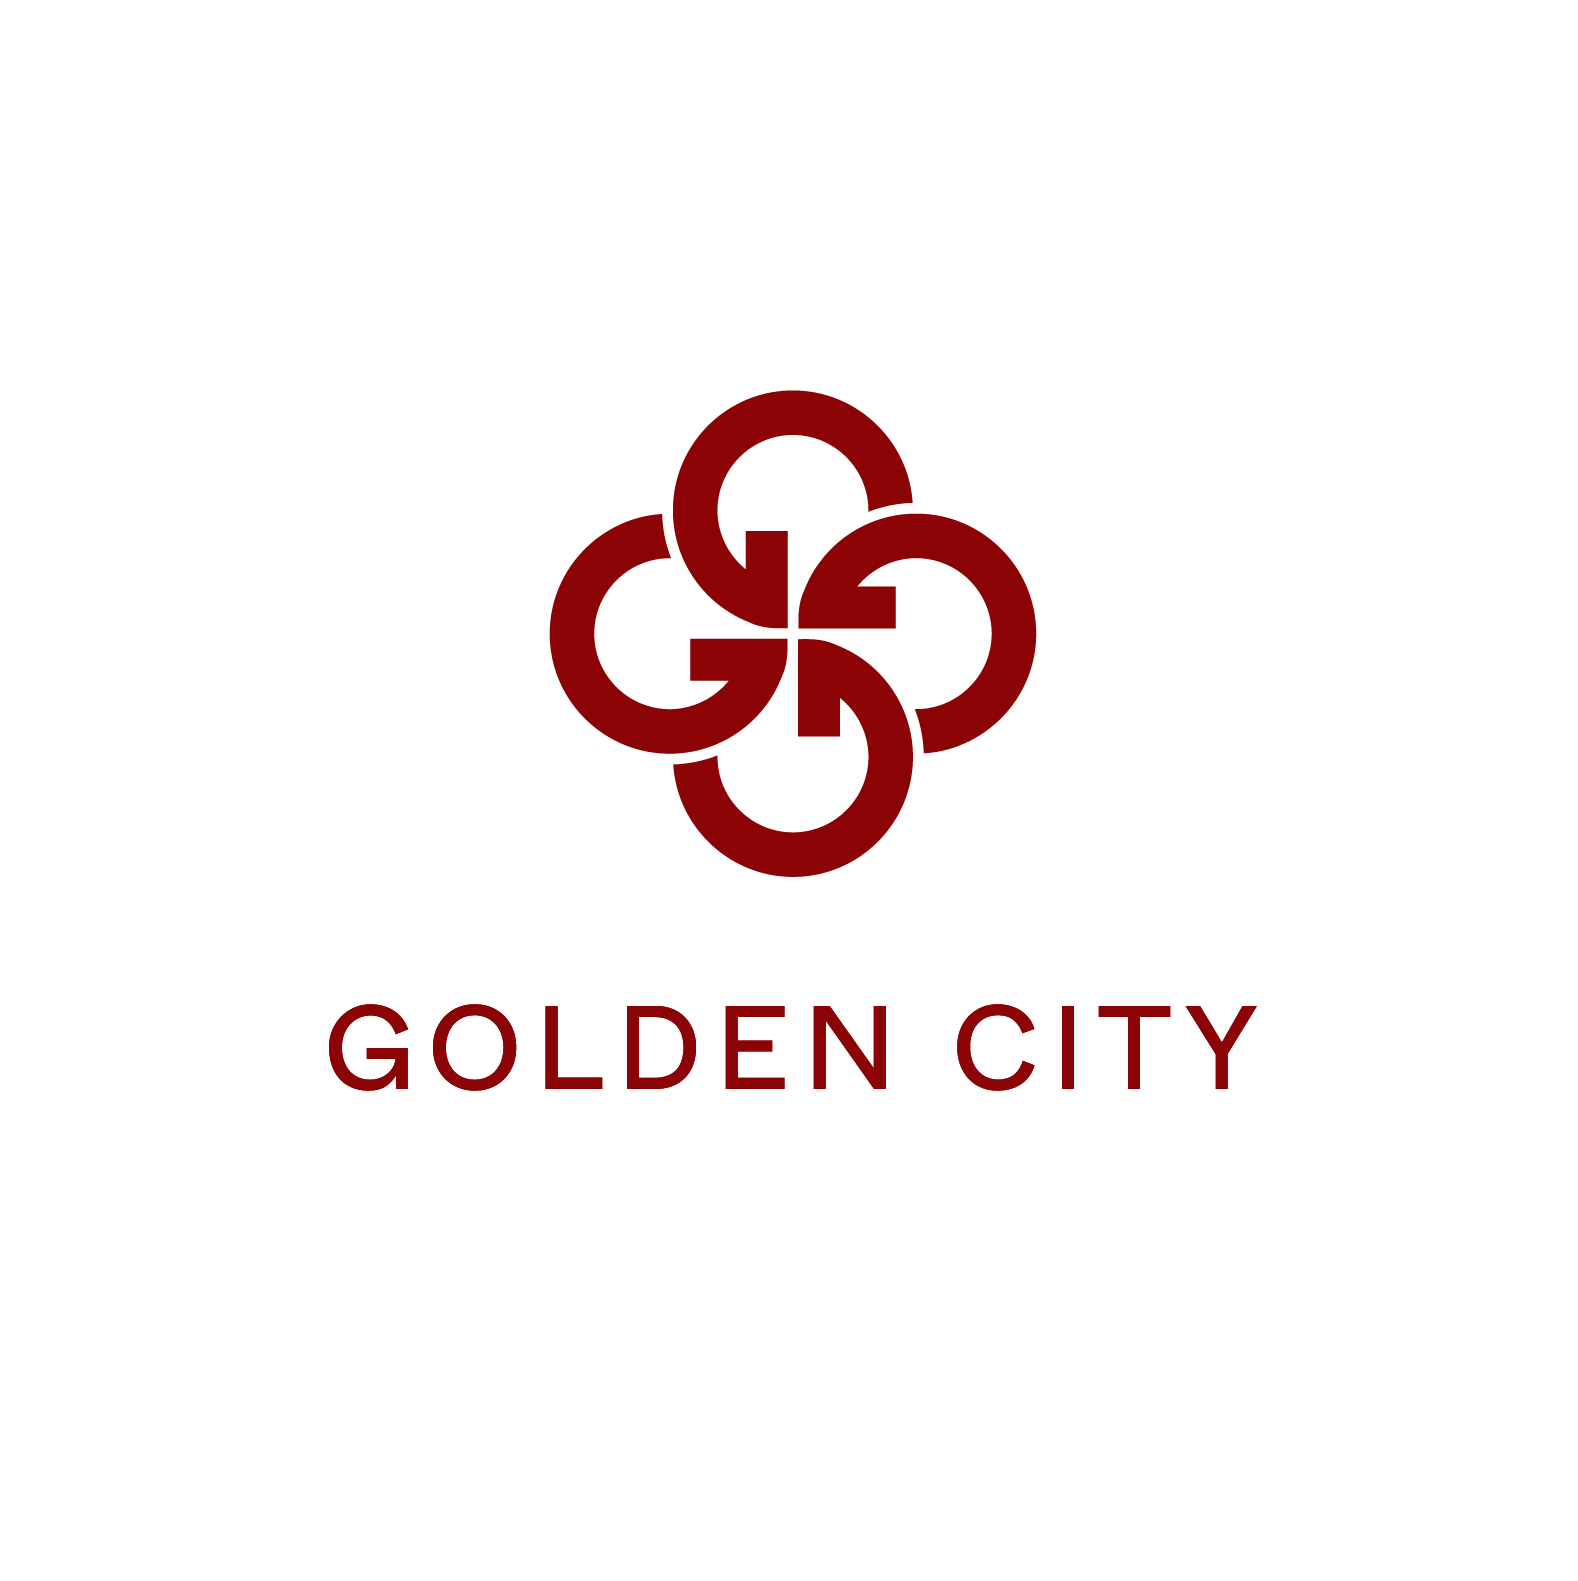 Logo Công ty Cổ phần Golden City